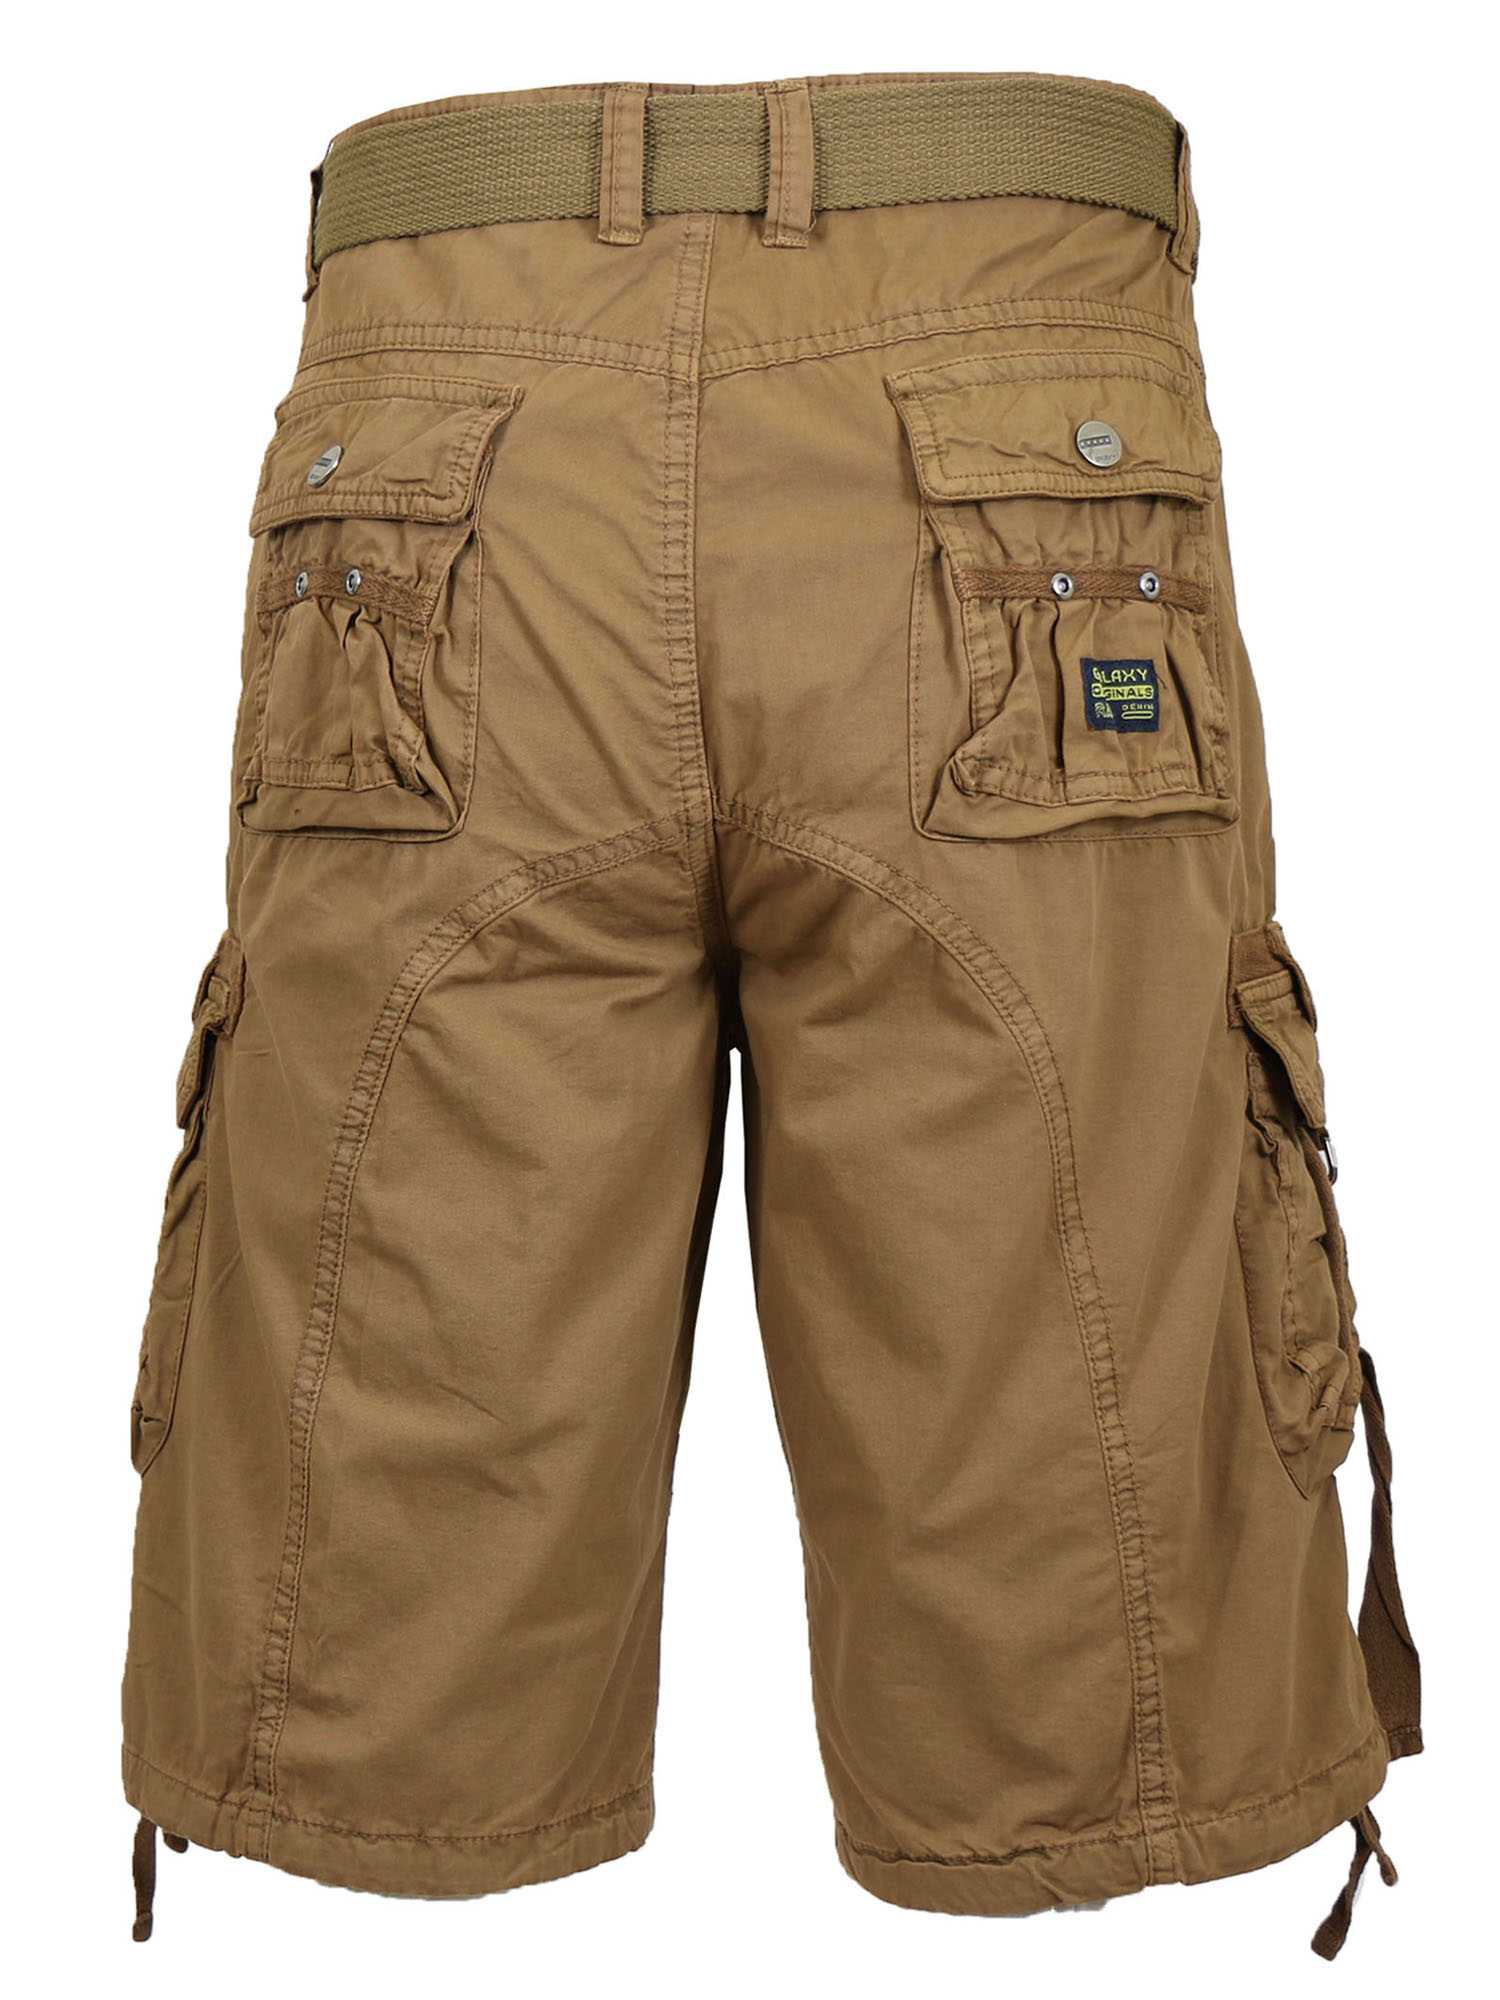 Men's Distressed Vintage Belted Cargo Utility Shorts (Size 30-48) - image 3 of 4